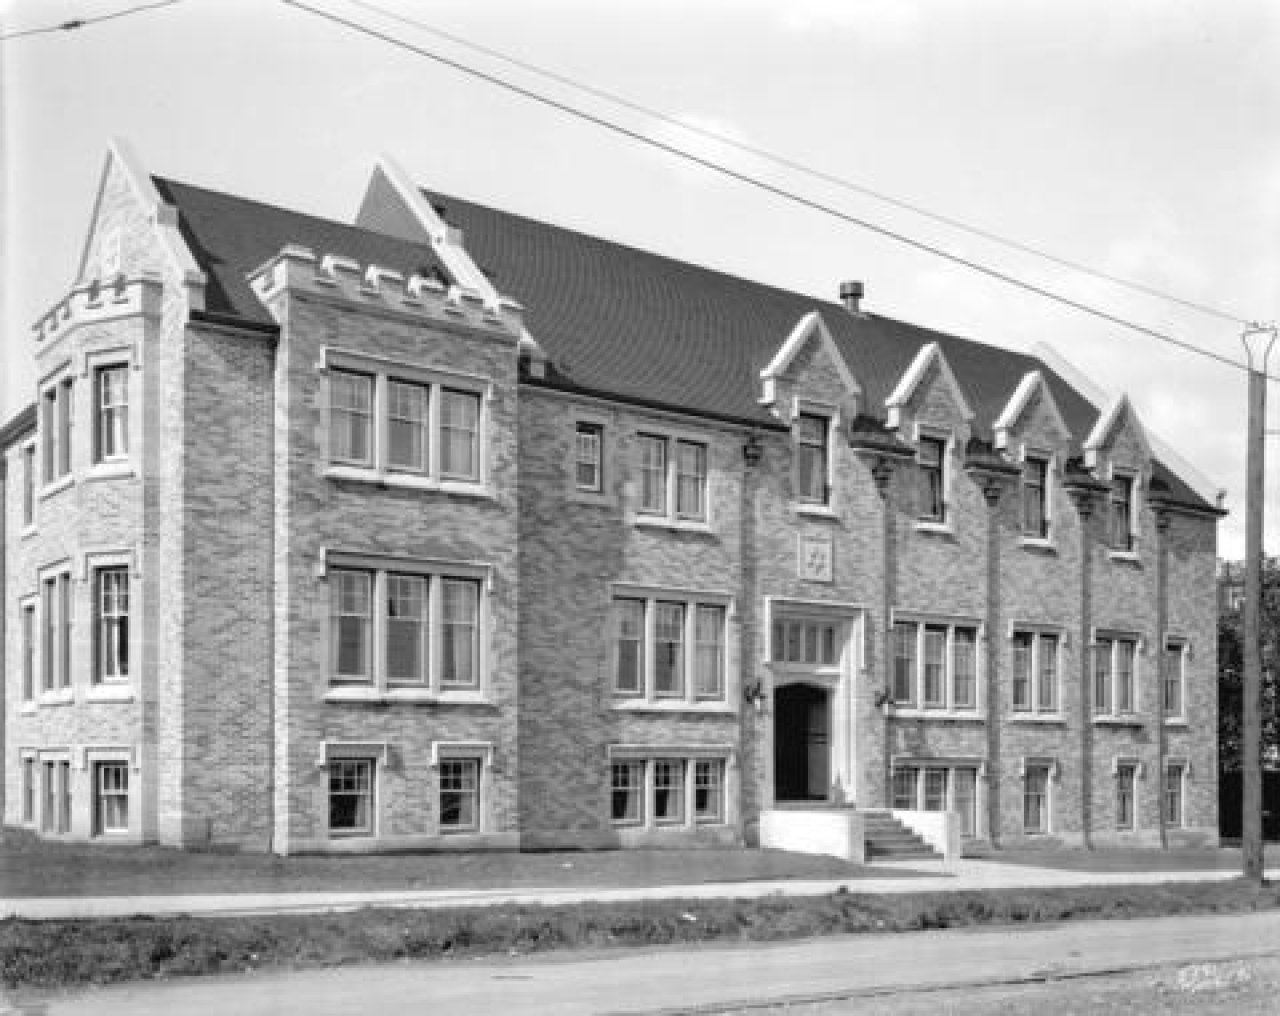 2675 Oak Street c. 1928
Source: City of Vancouver Archives Item : Bu N328.2 - [Jewish Community building at 2675 Oak Street]